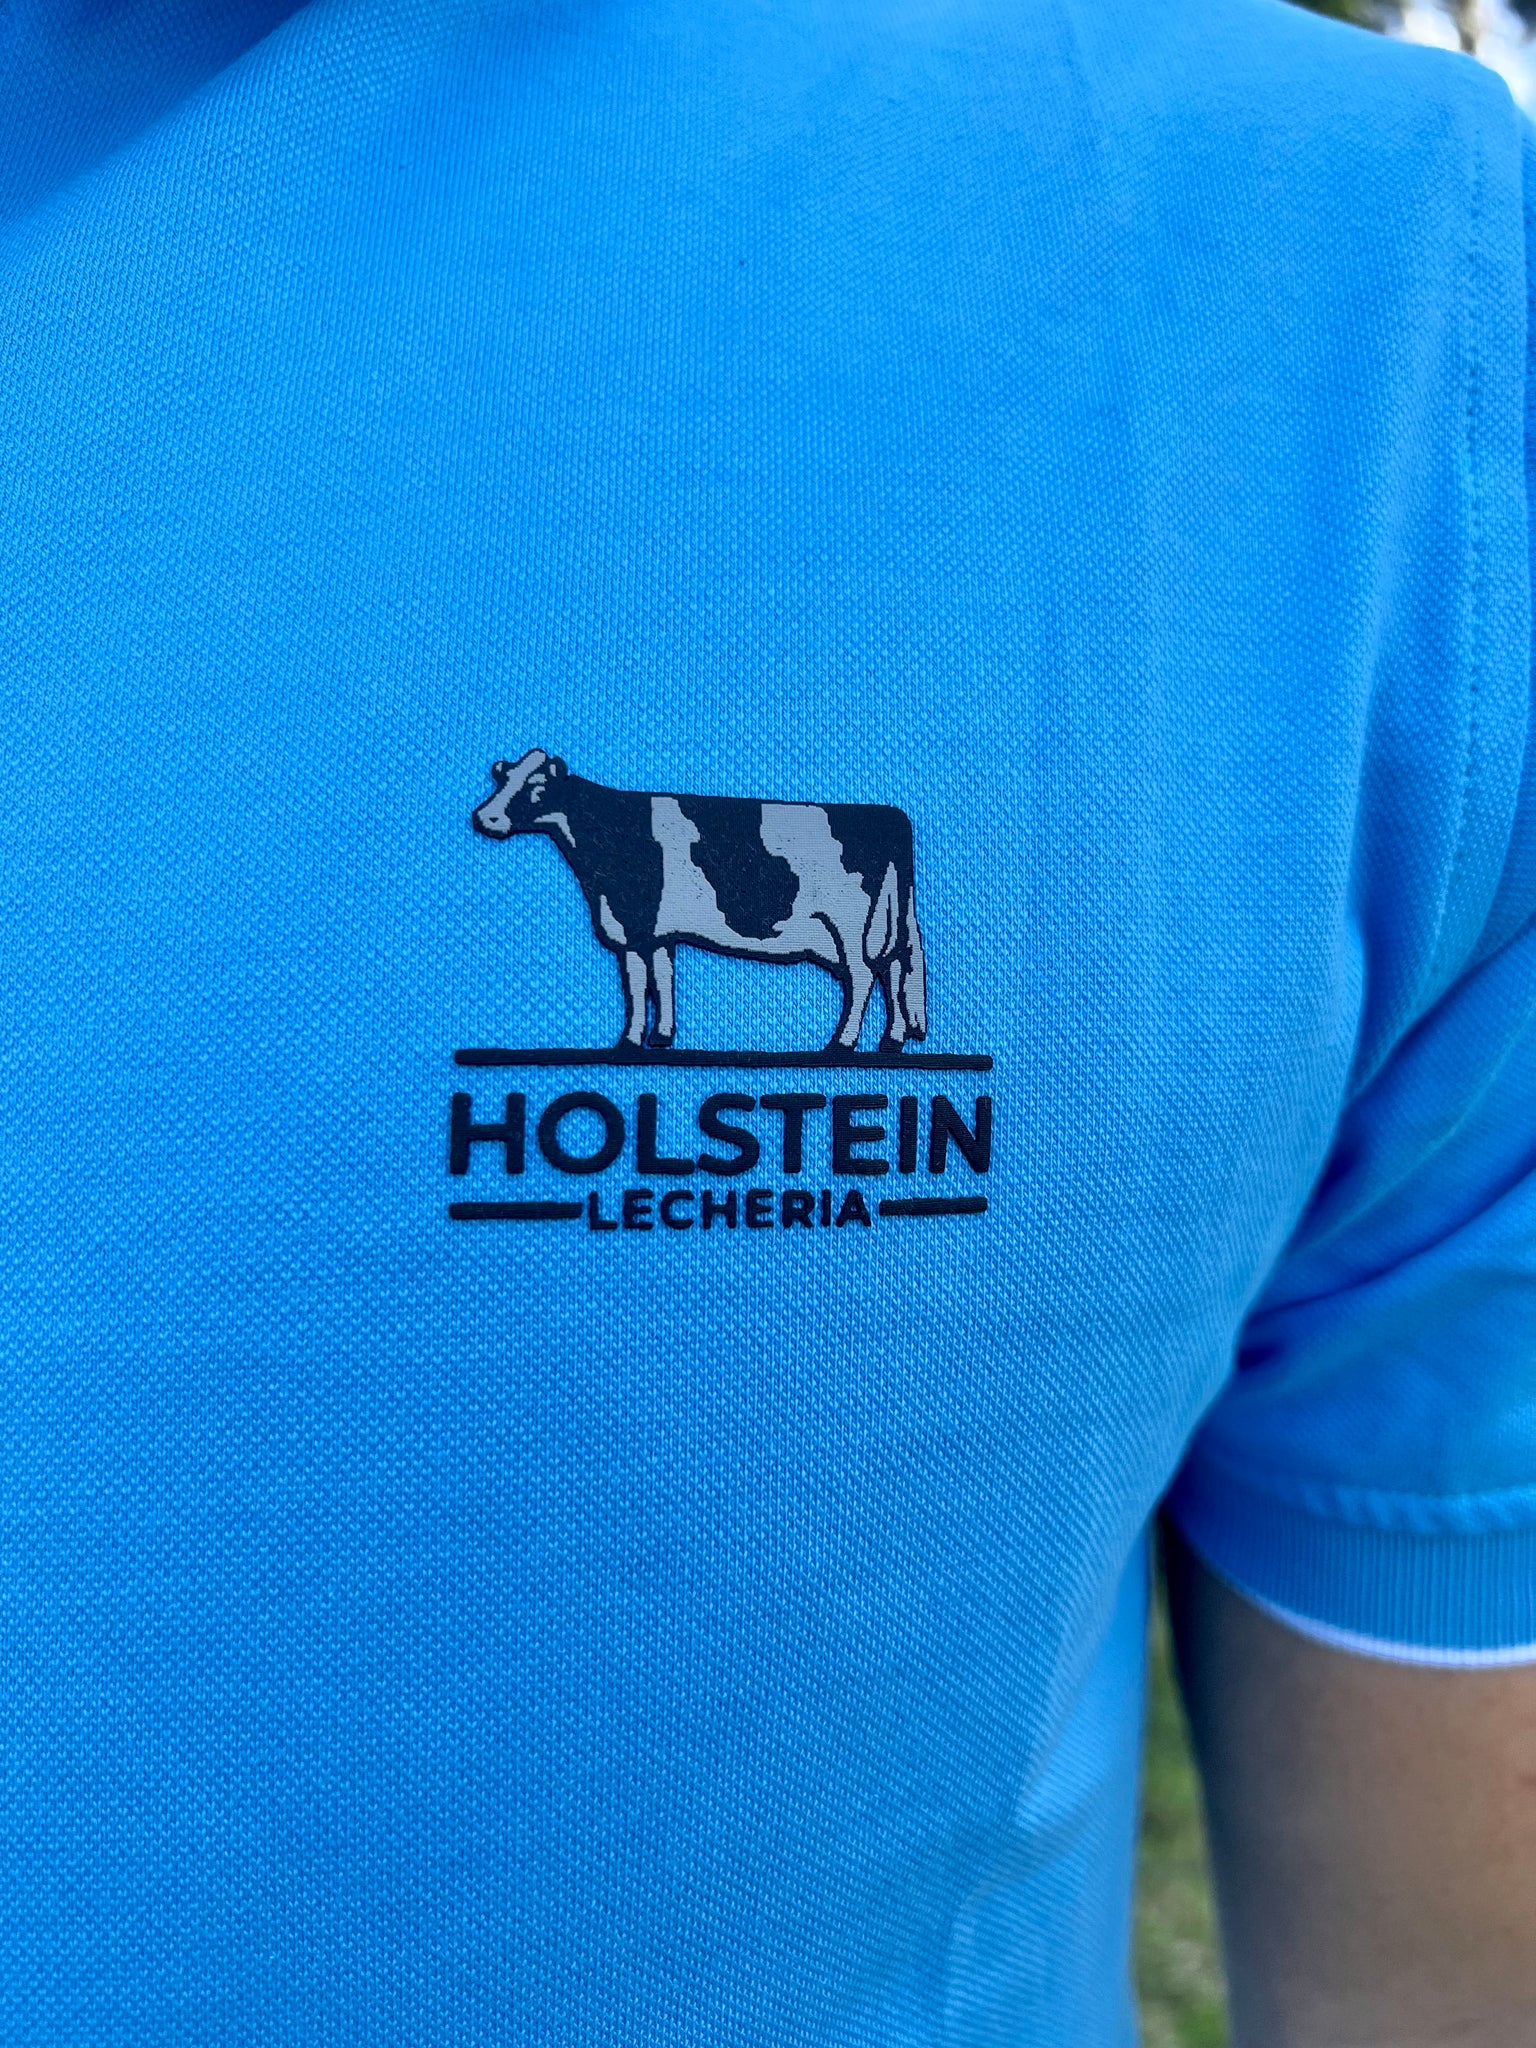 Polo Holstein Lecheria Azul 0523 R